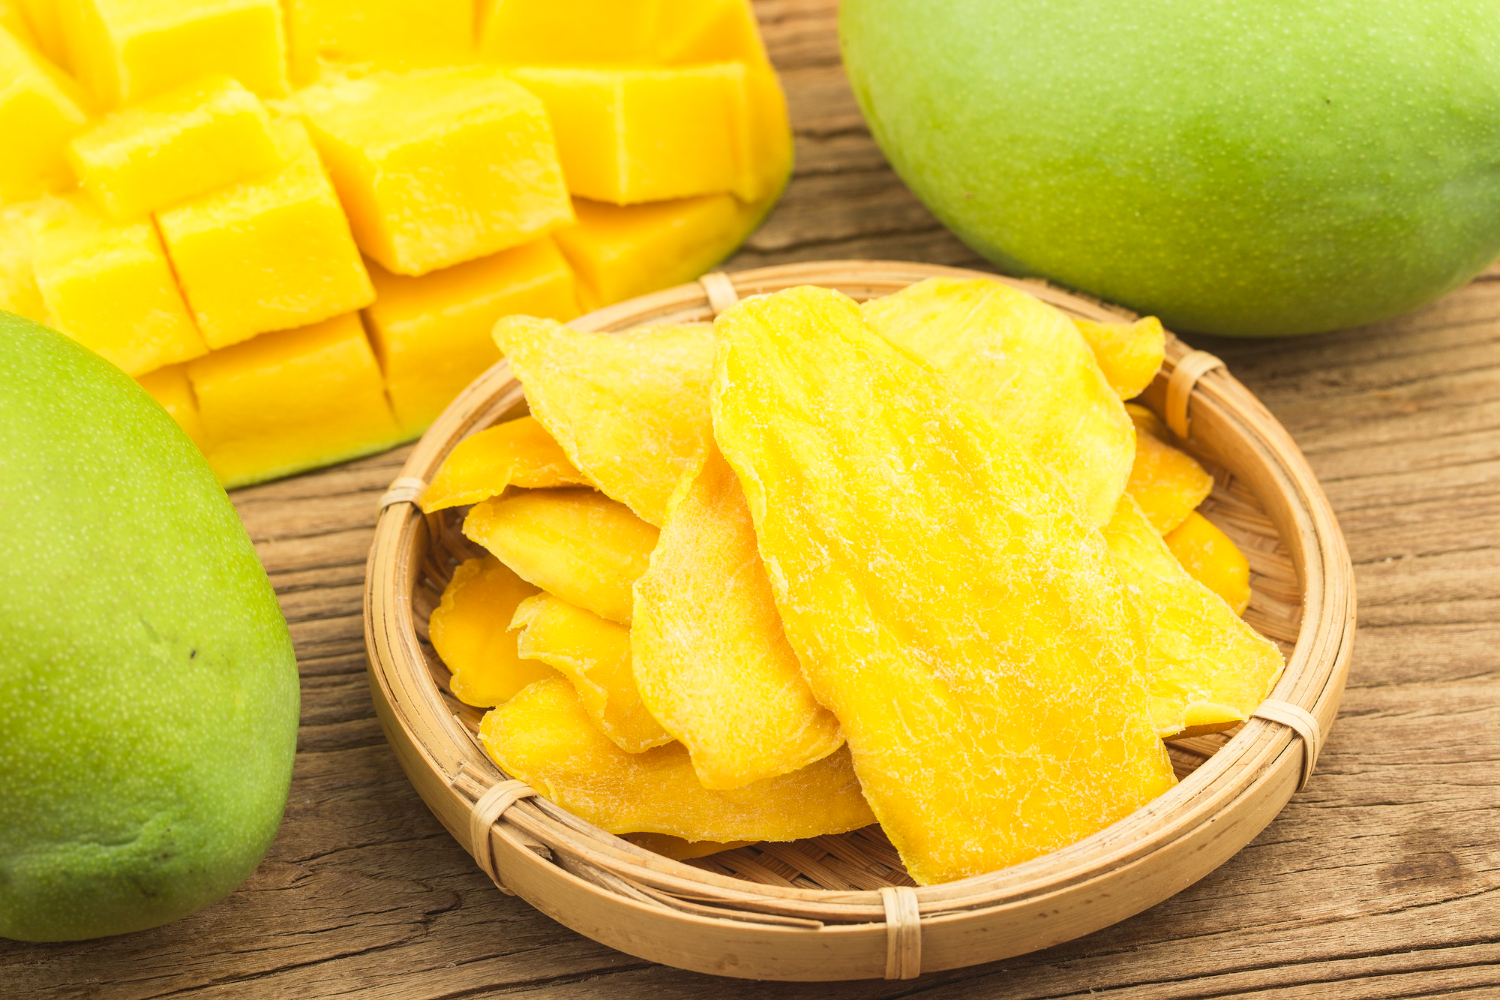 dried-mango-background-candied-slices-mango-fruit-close-up